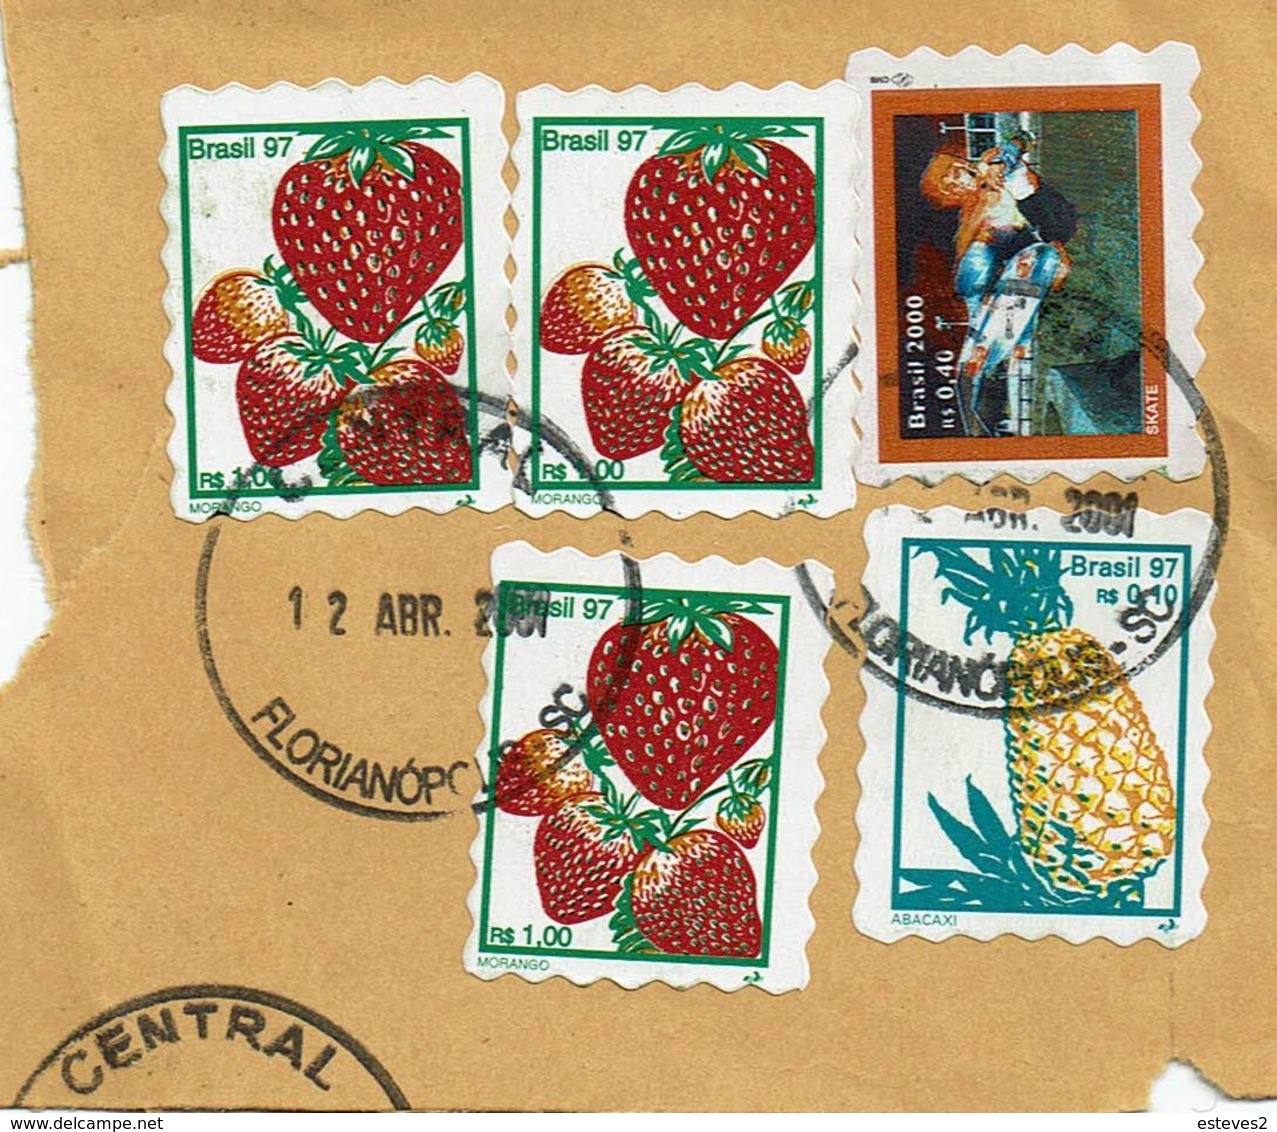 Brazil , Bresil , Brasil , 1997 , 2000 , Fruits  ,  Abacaxi , Papaia , Skate , Florianapolis Postmark - Skateboard